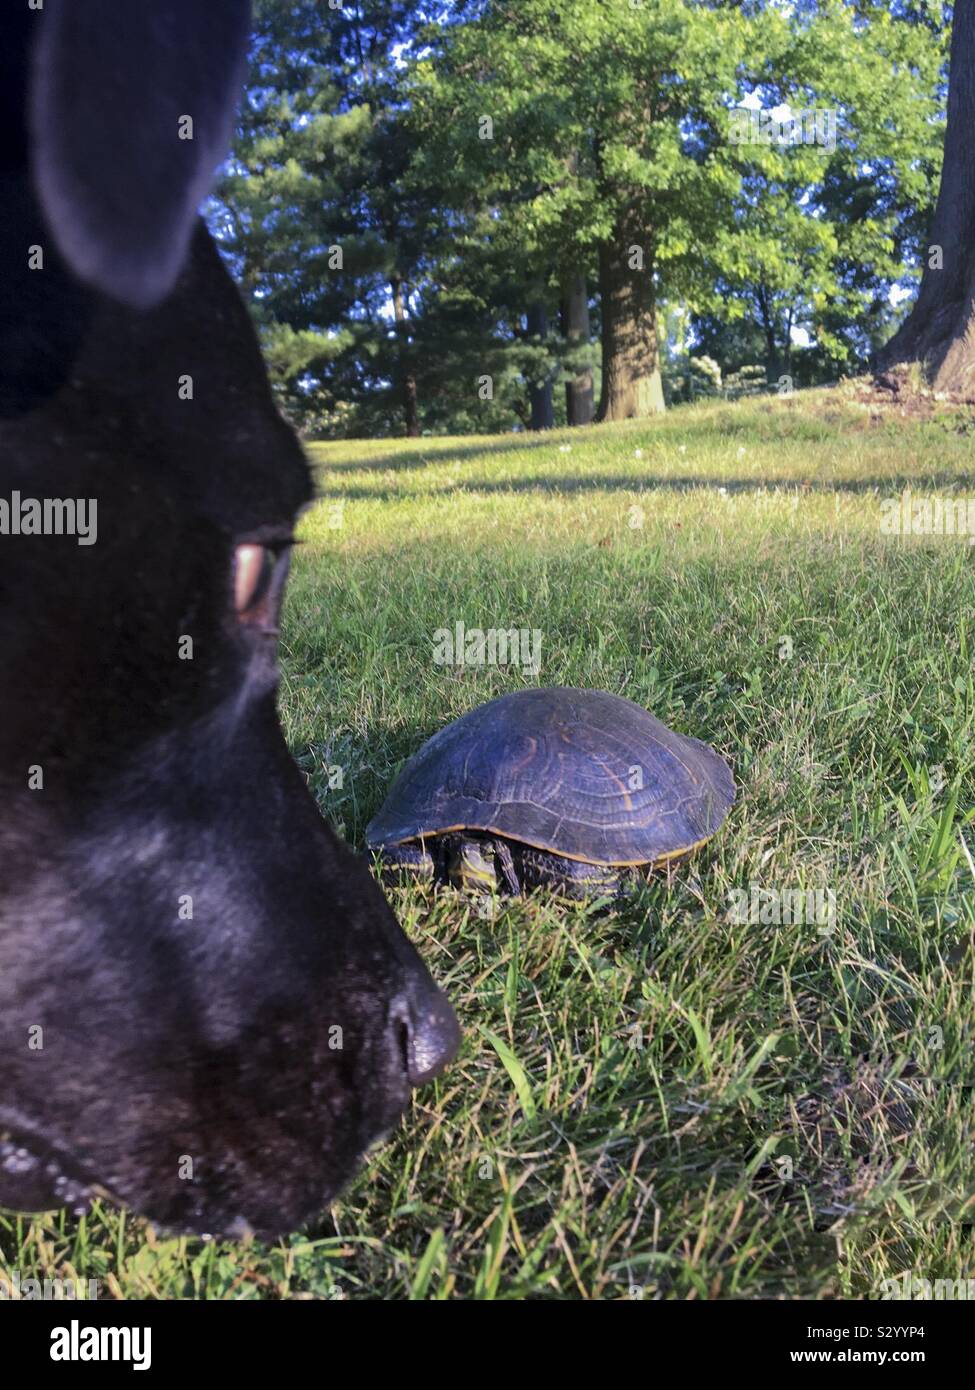 Black Labrador looking at turtle Stock Photo